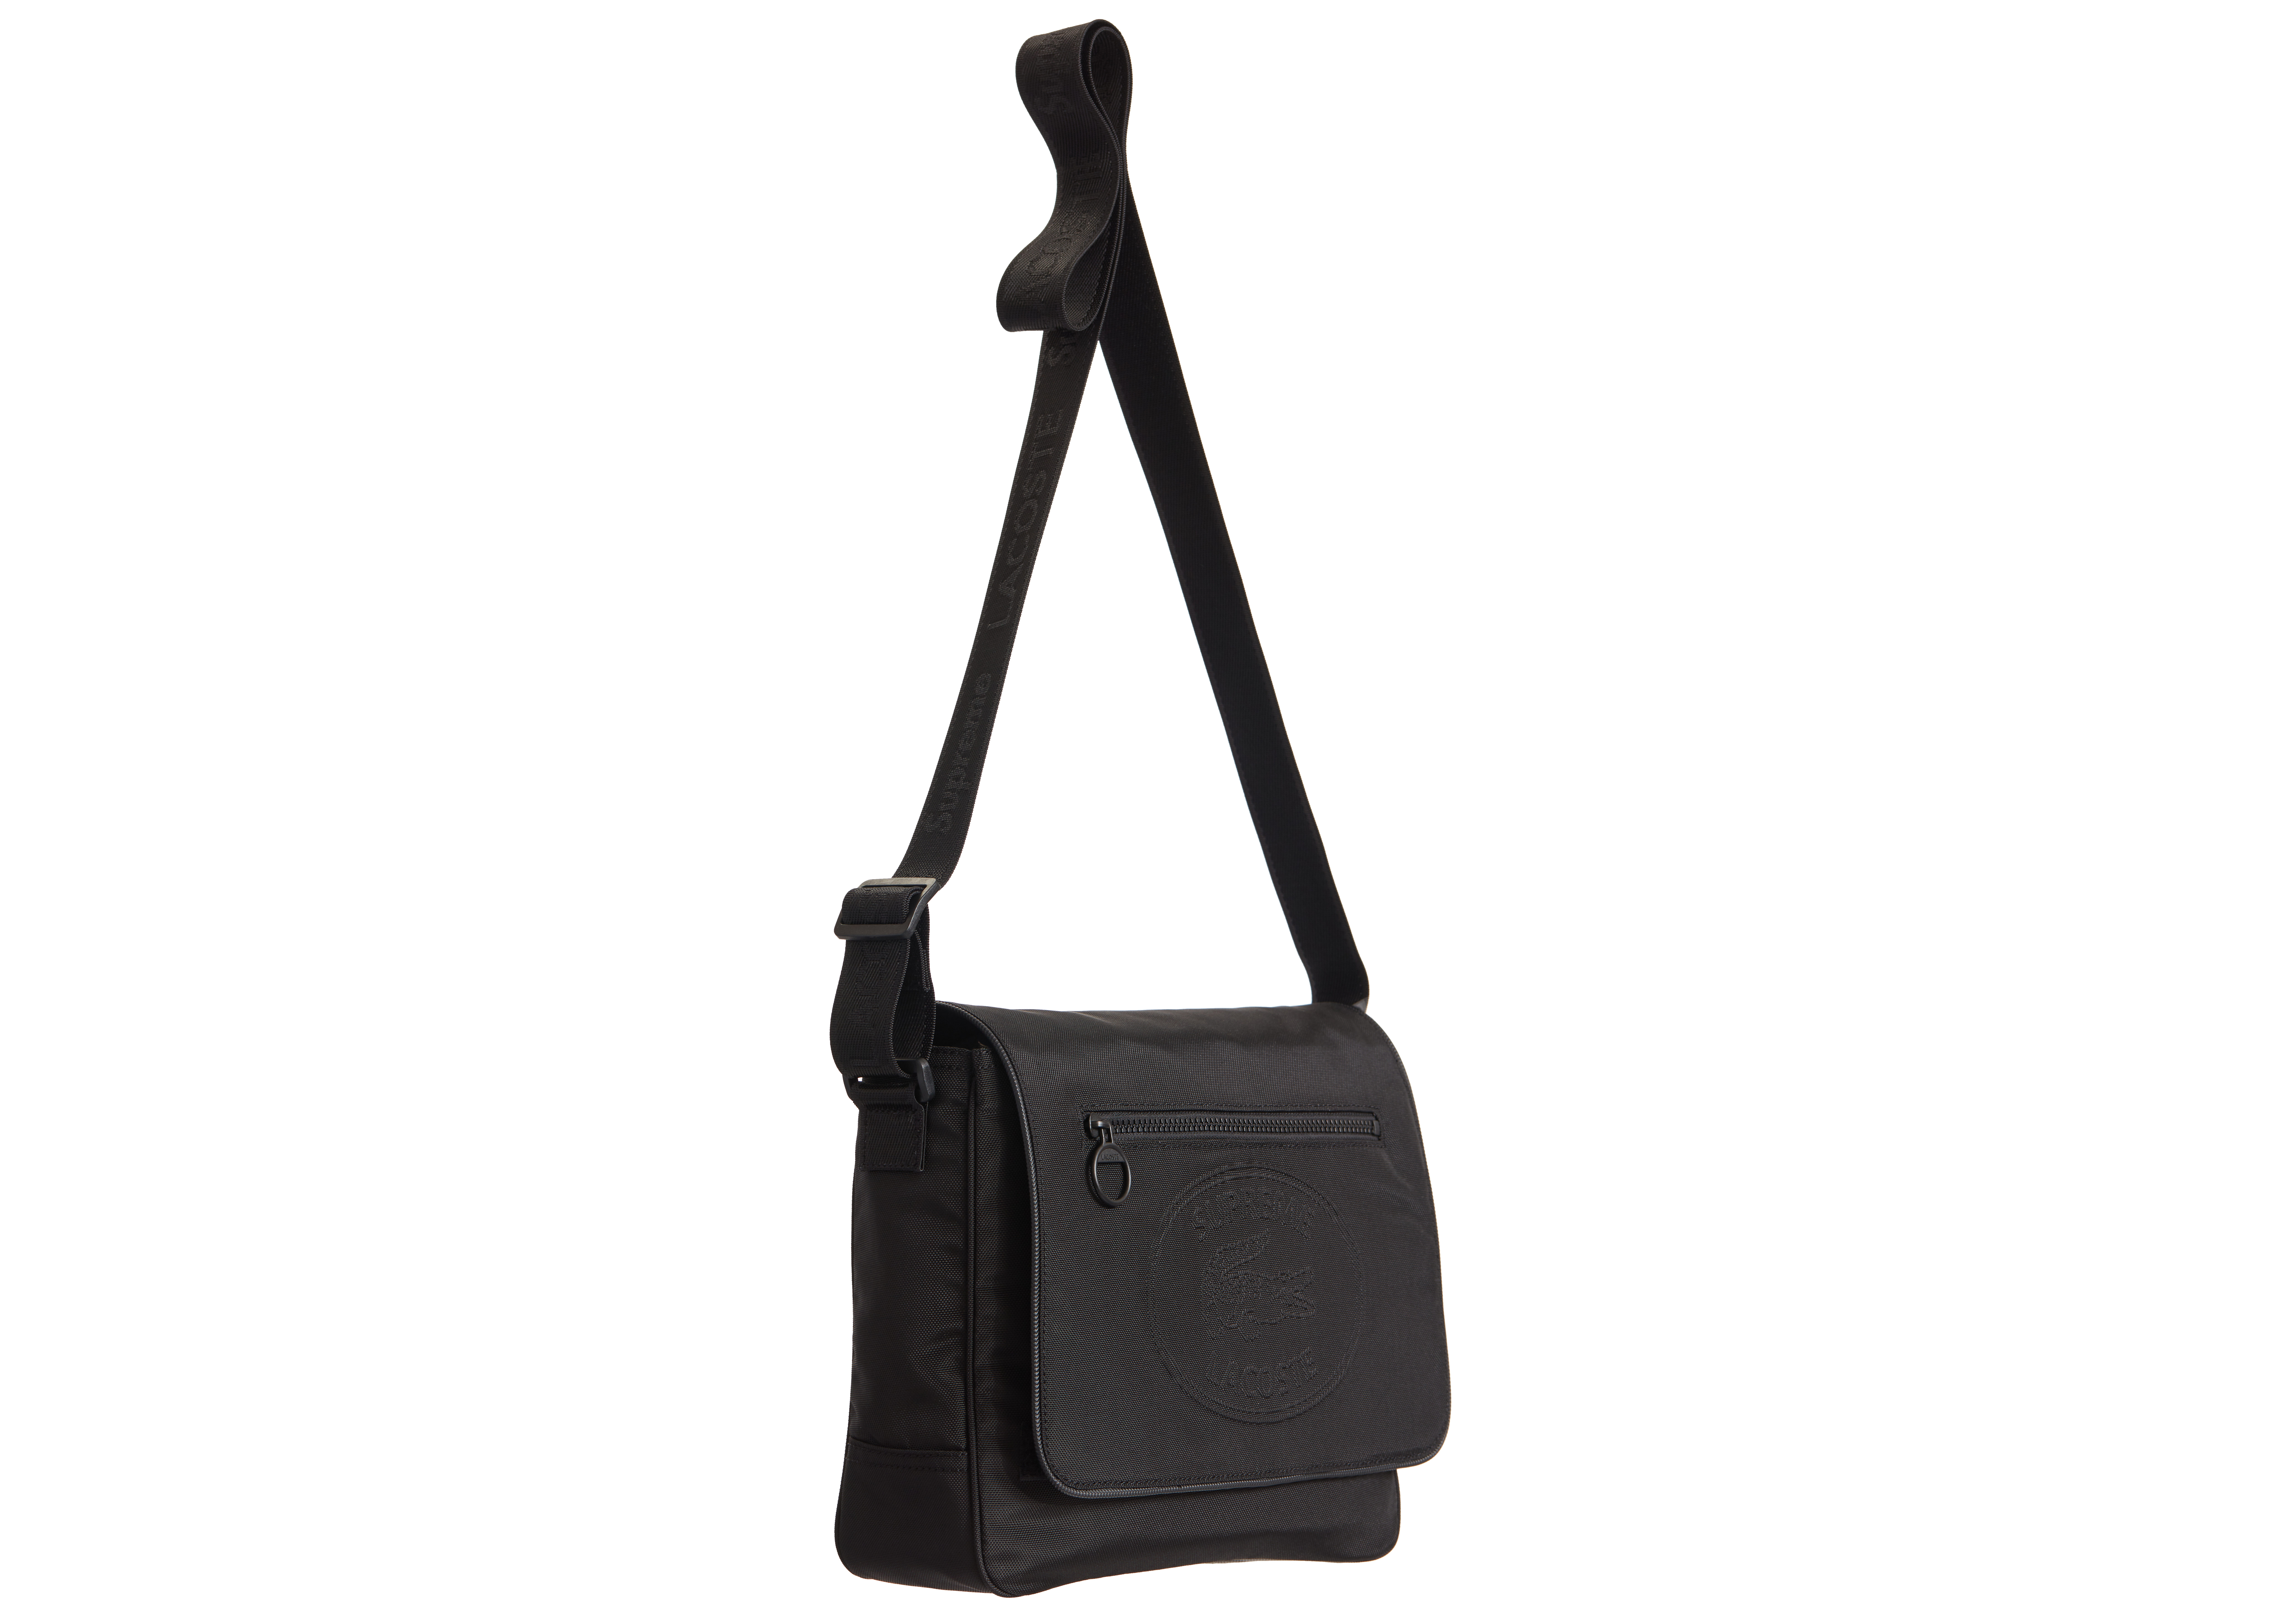 lacoste black handbag